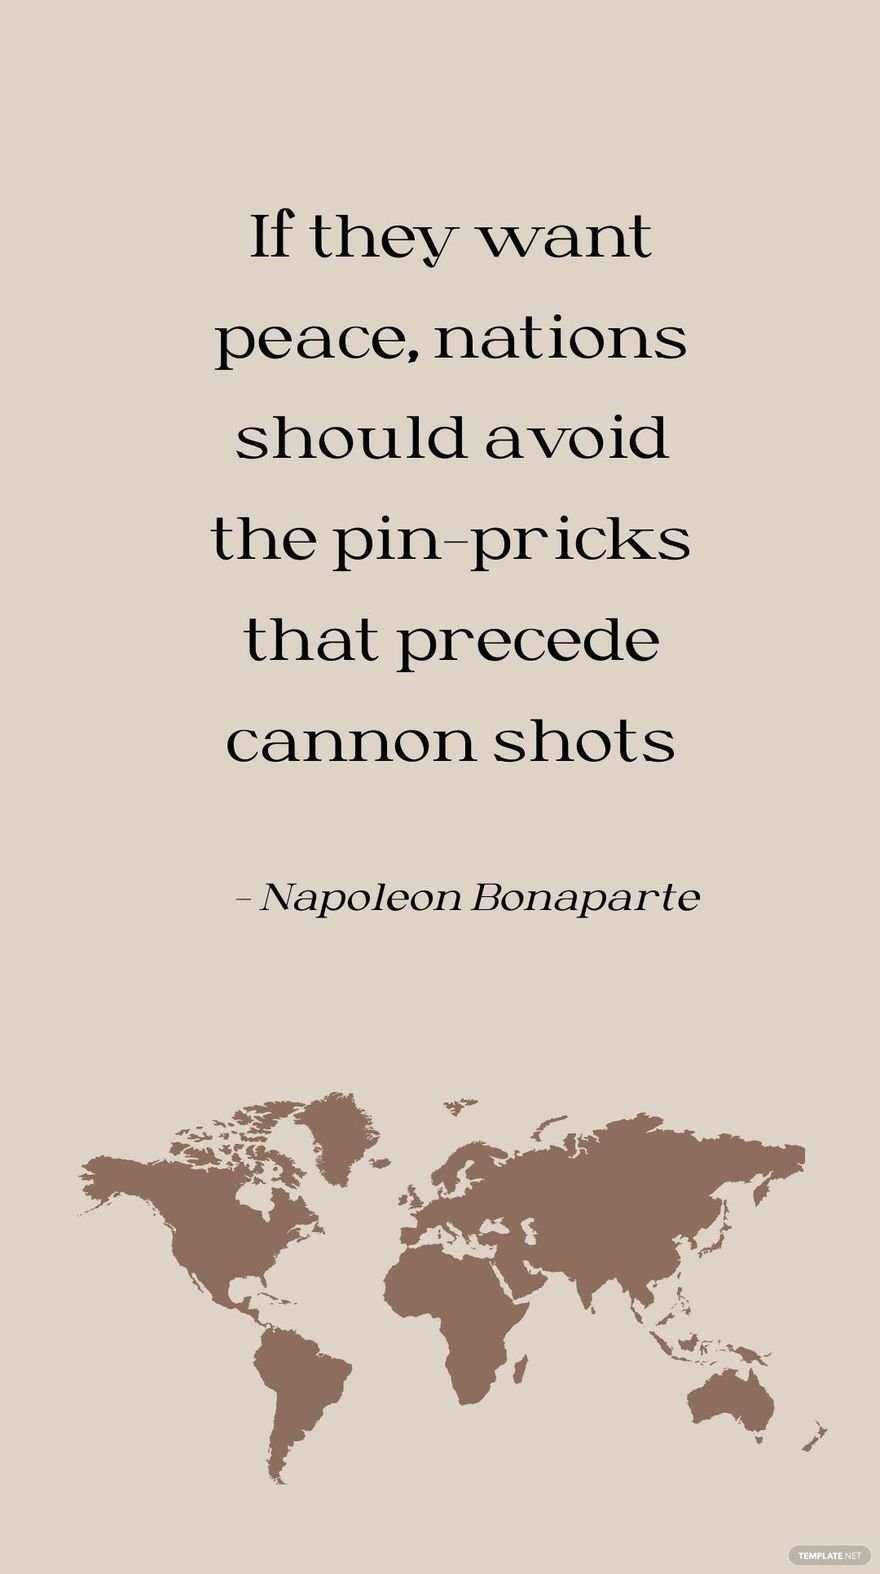 napoleon bonaparte quotes on love